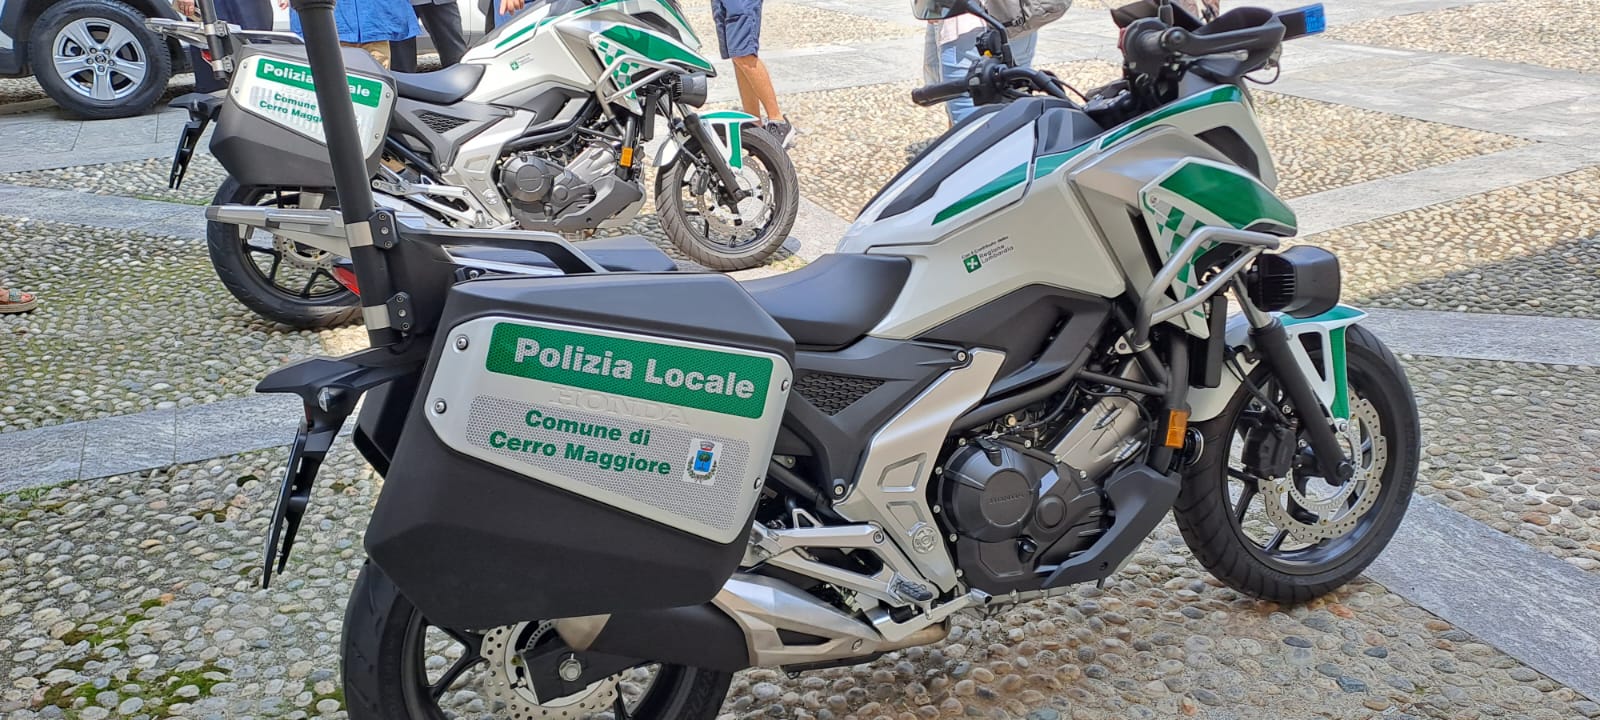 cerro polizia locale moto etilometro romano la russa